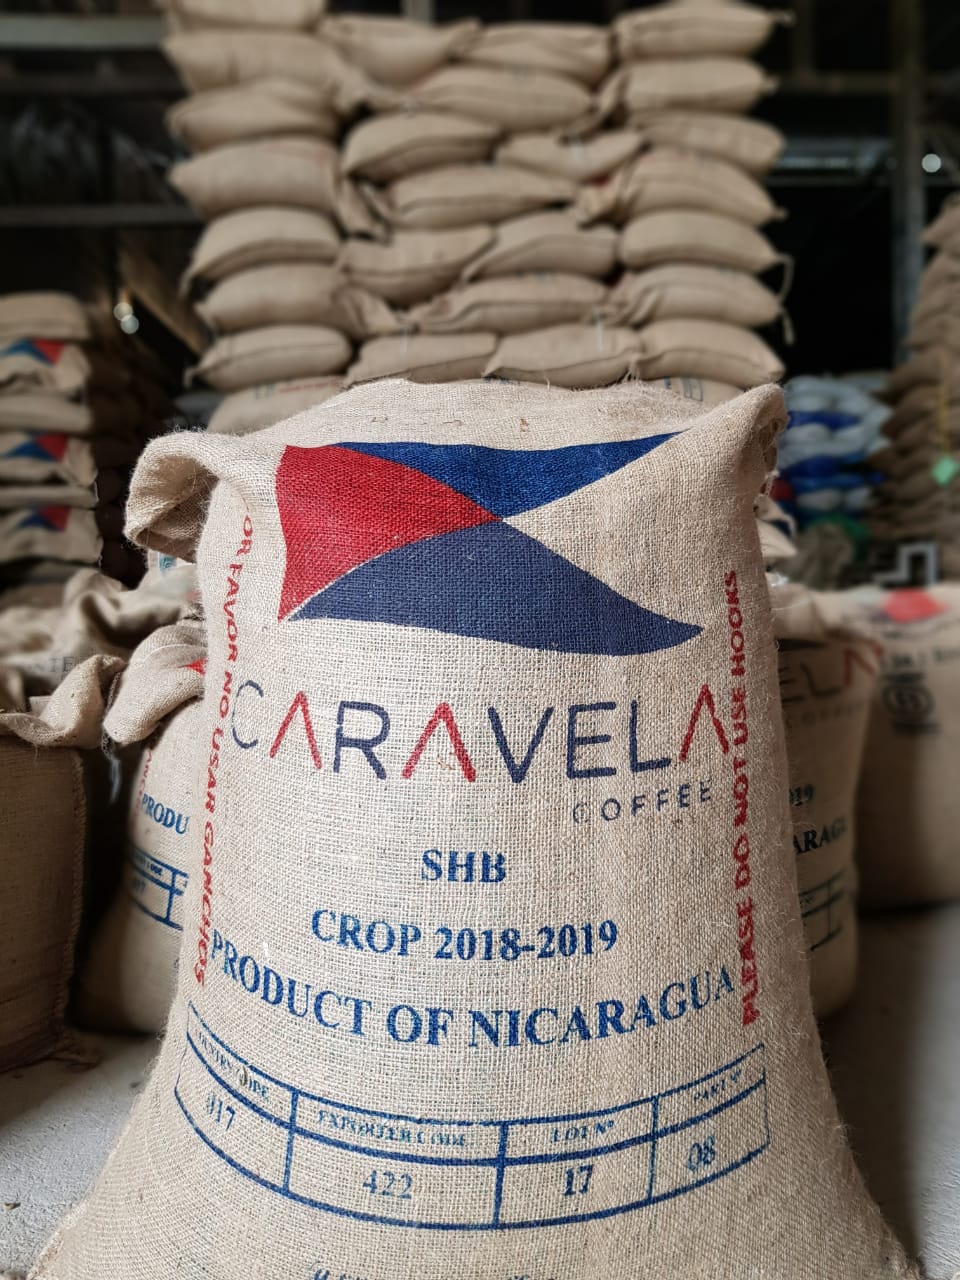 Caravella_Coffee